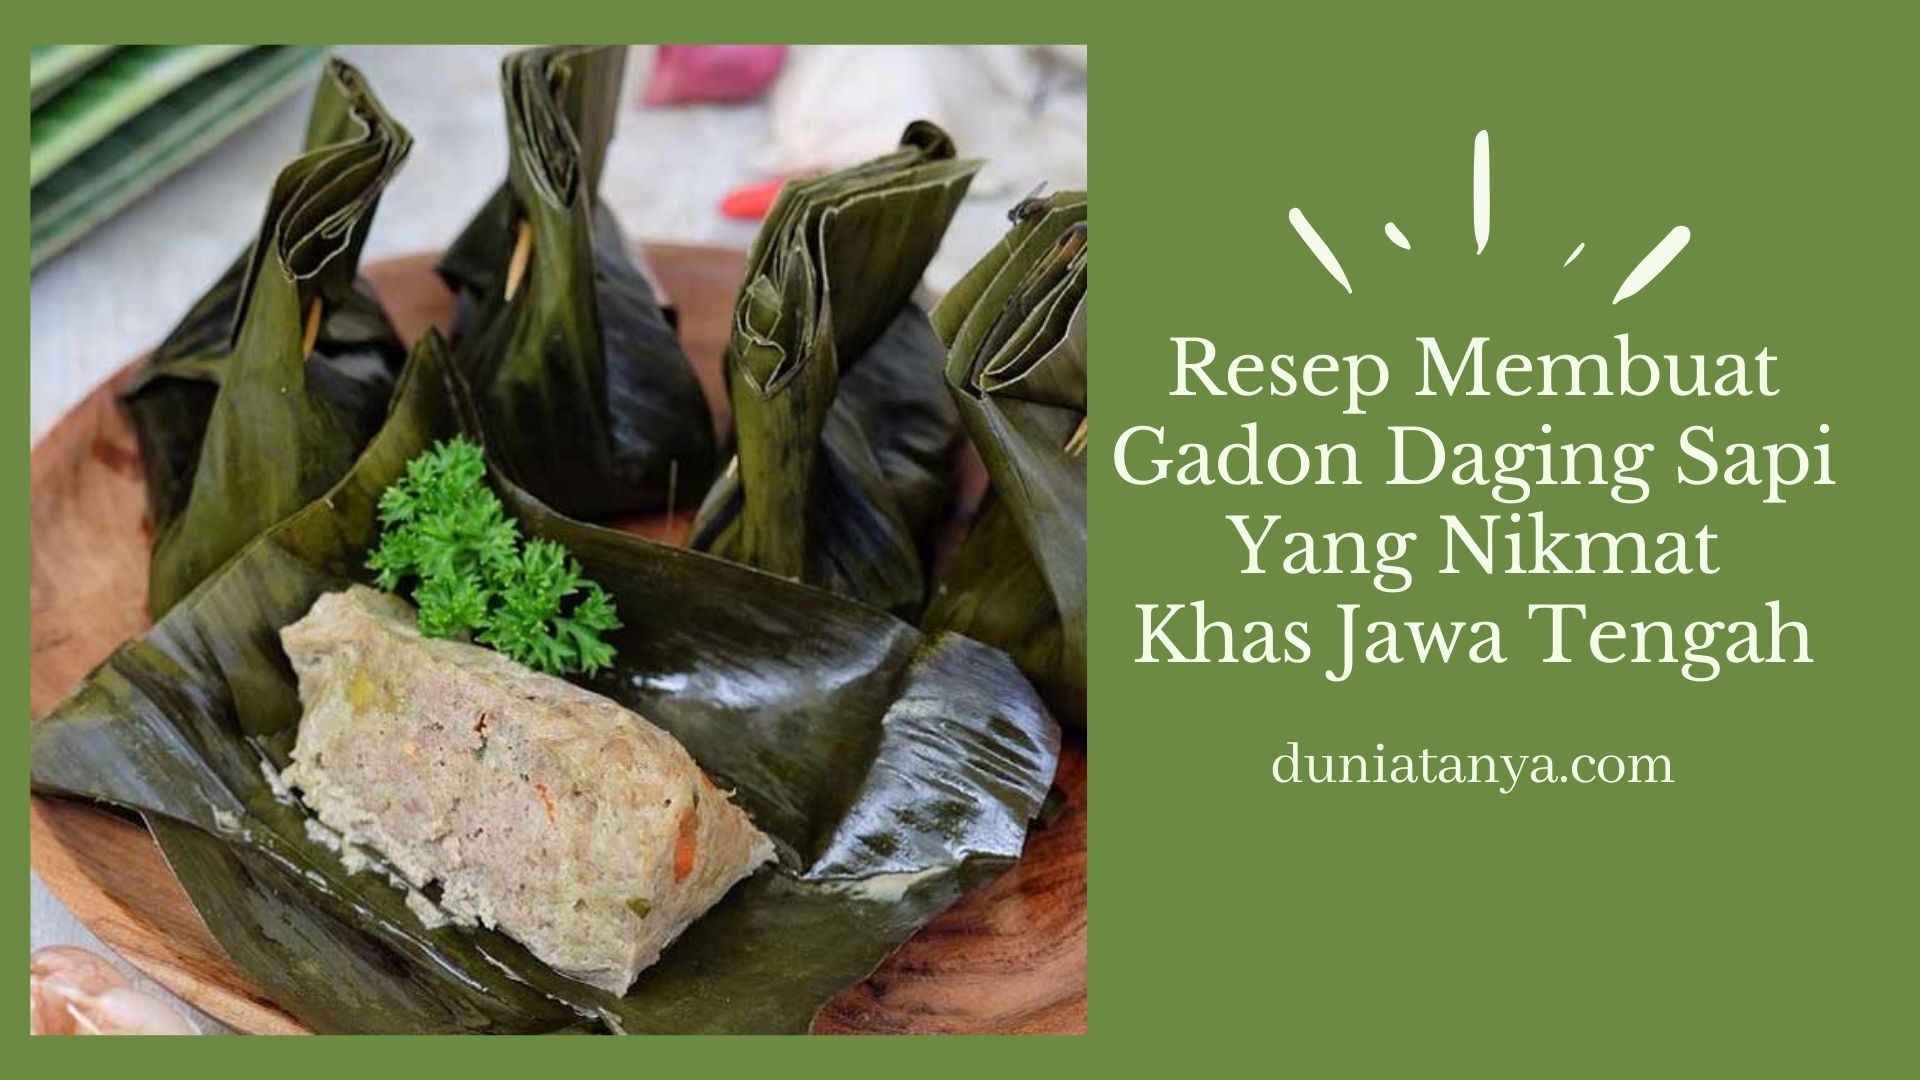 You are currently viewing Resep Membuat Gadon Daging Sapi Yang Nikmat Khas Jawa Tengah